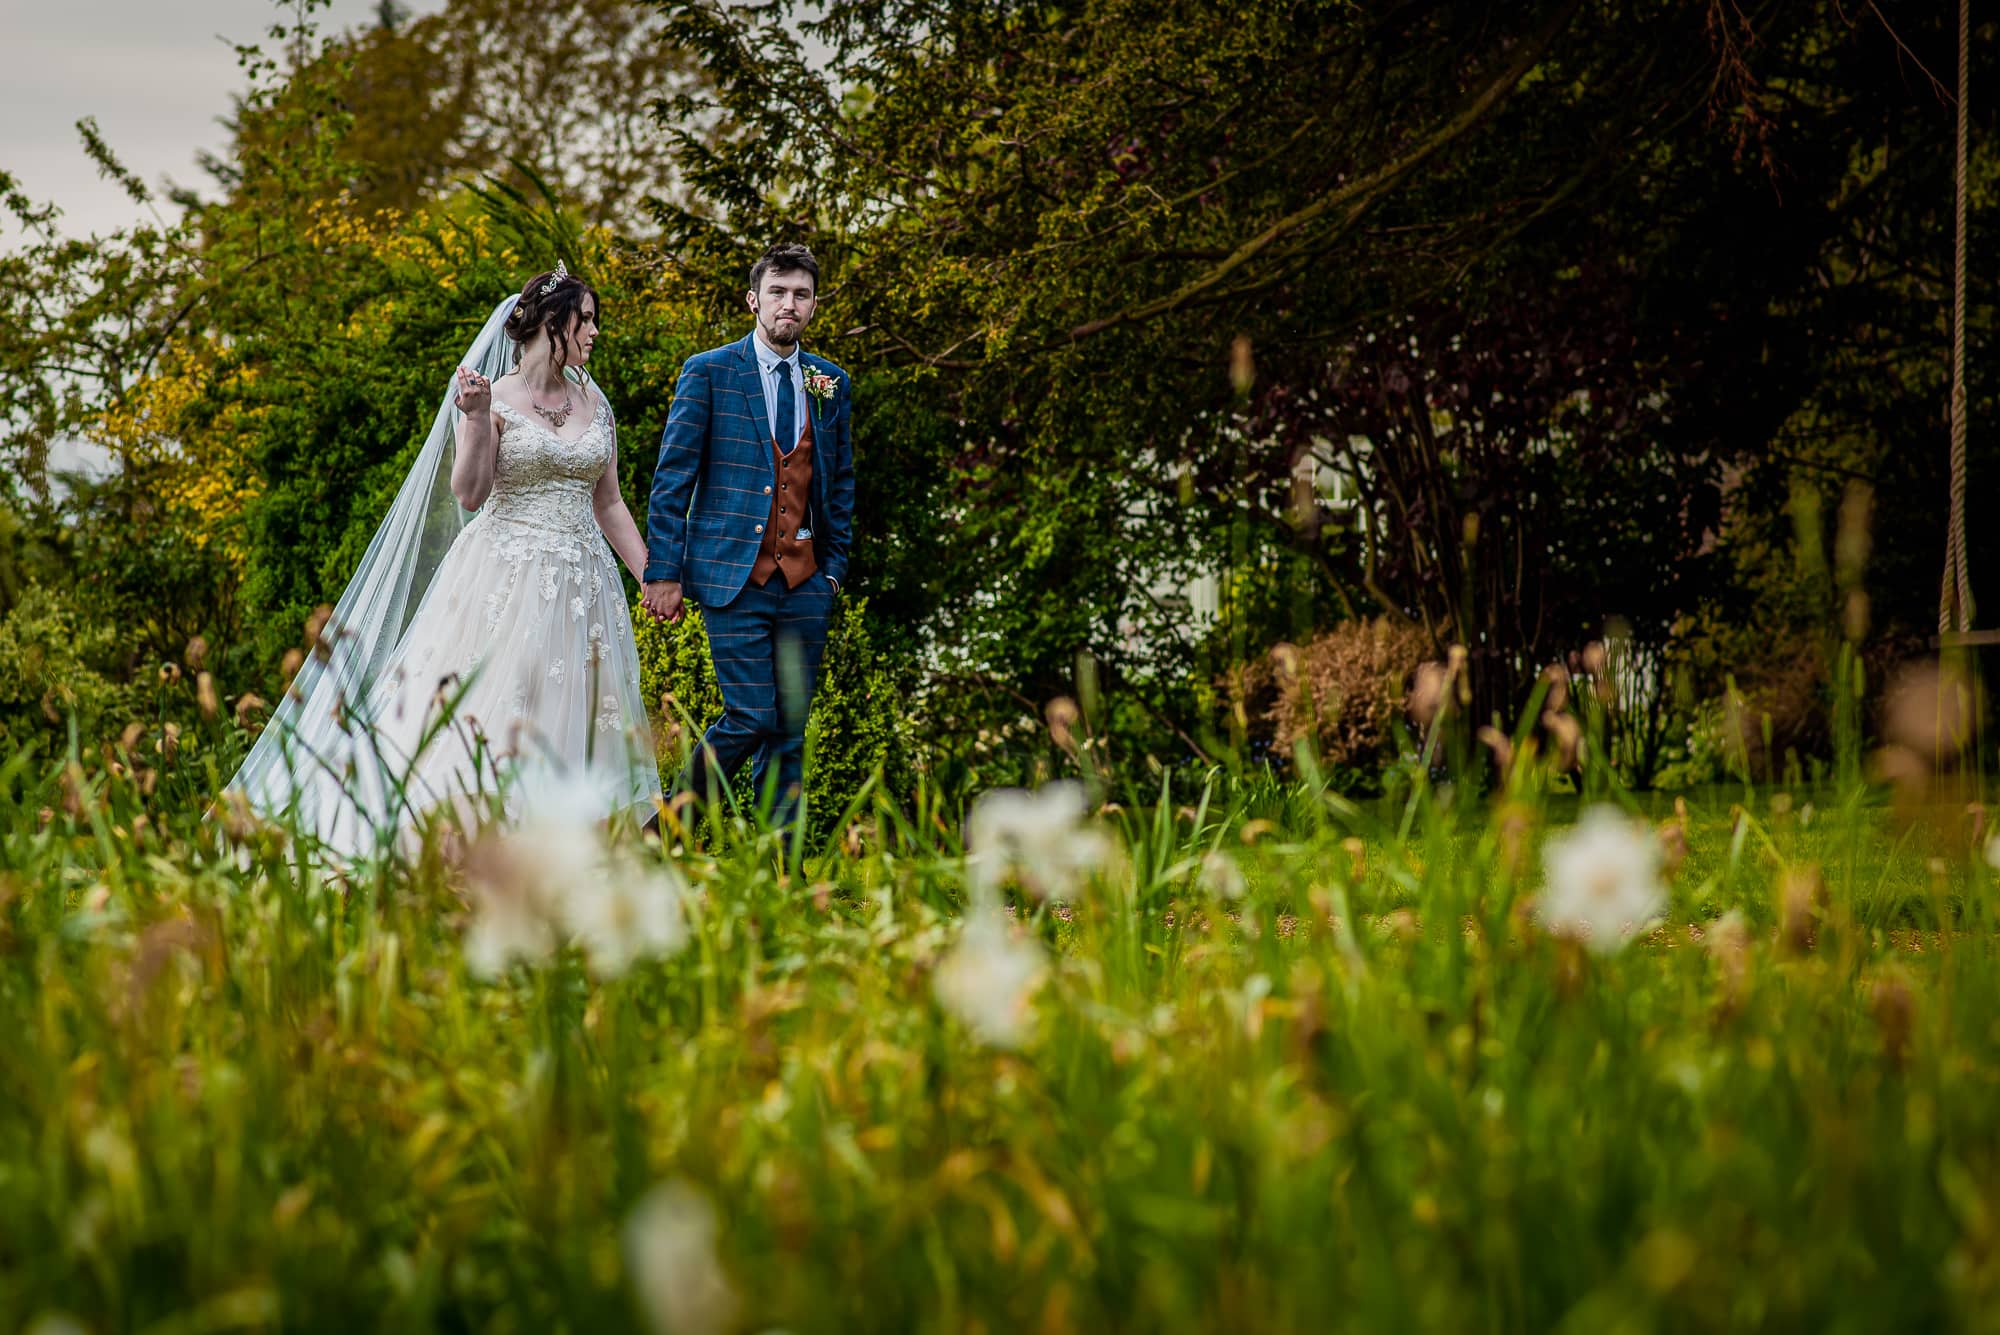 Bride and groom walking the grounds of Stradsett Hall Wedding venue in Cambridgehire